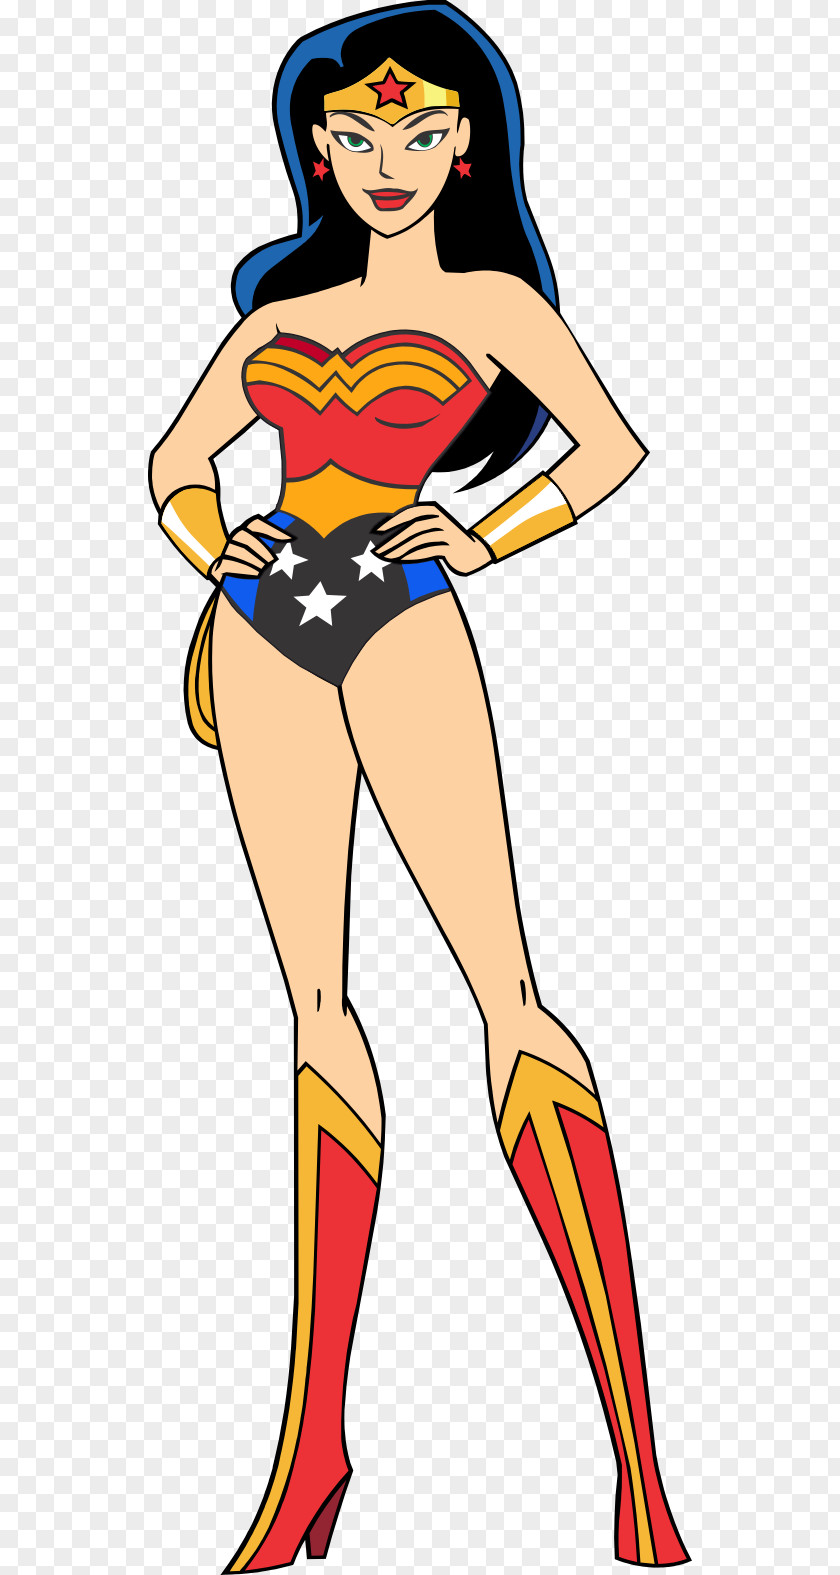 MULHER MARAVILHA Superman/Wonder Woman Superhero Comics PNG